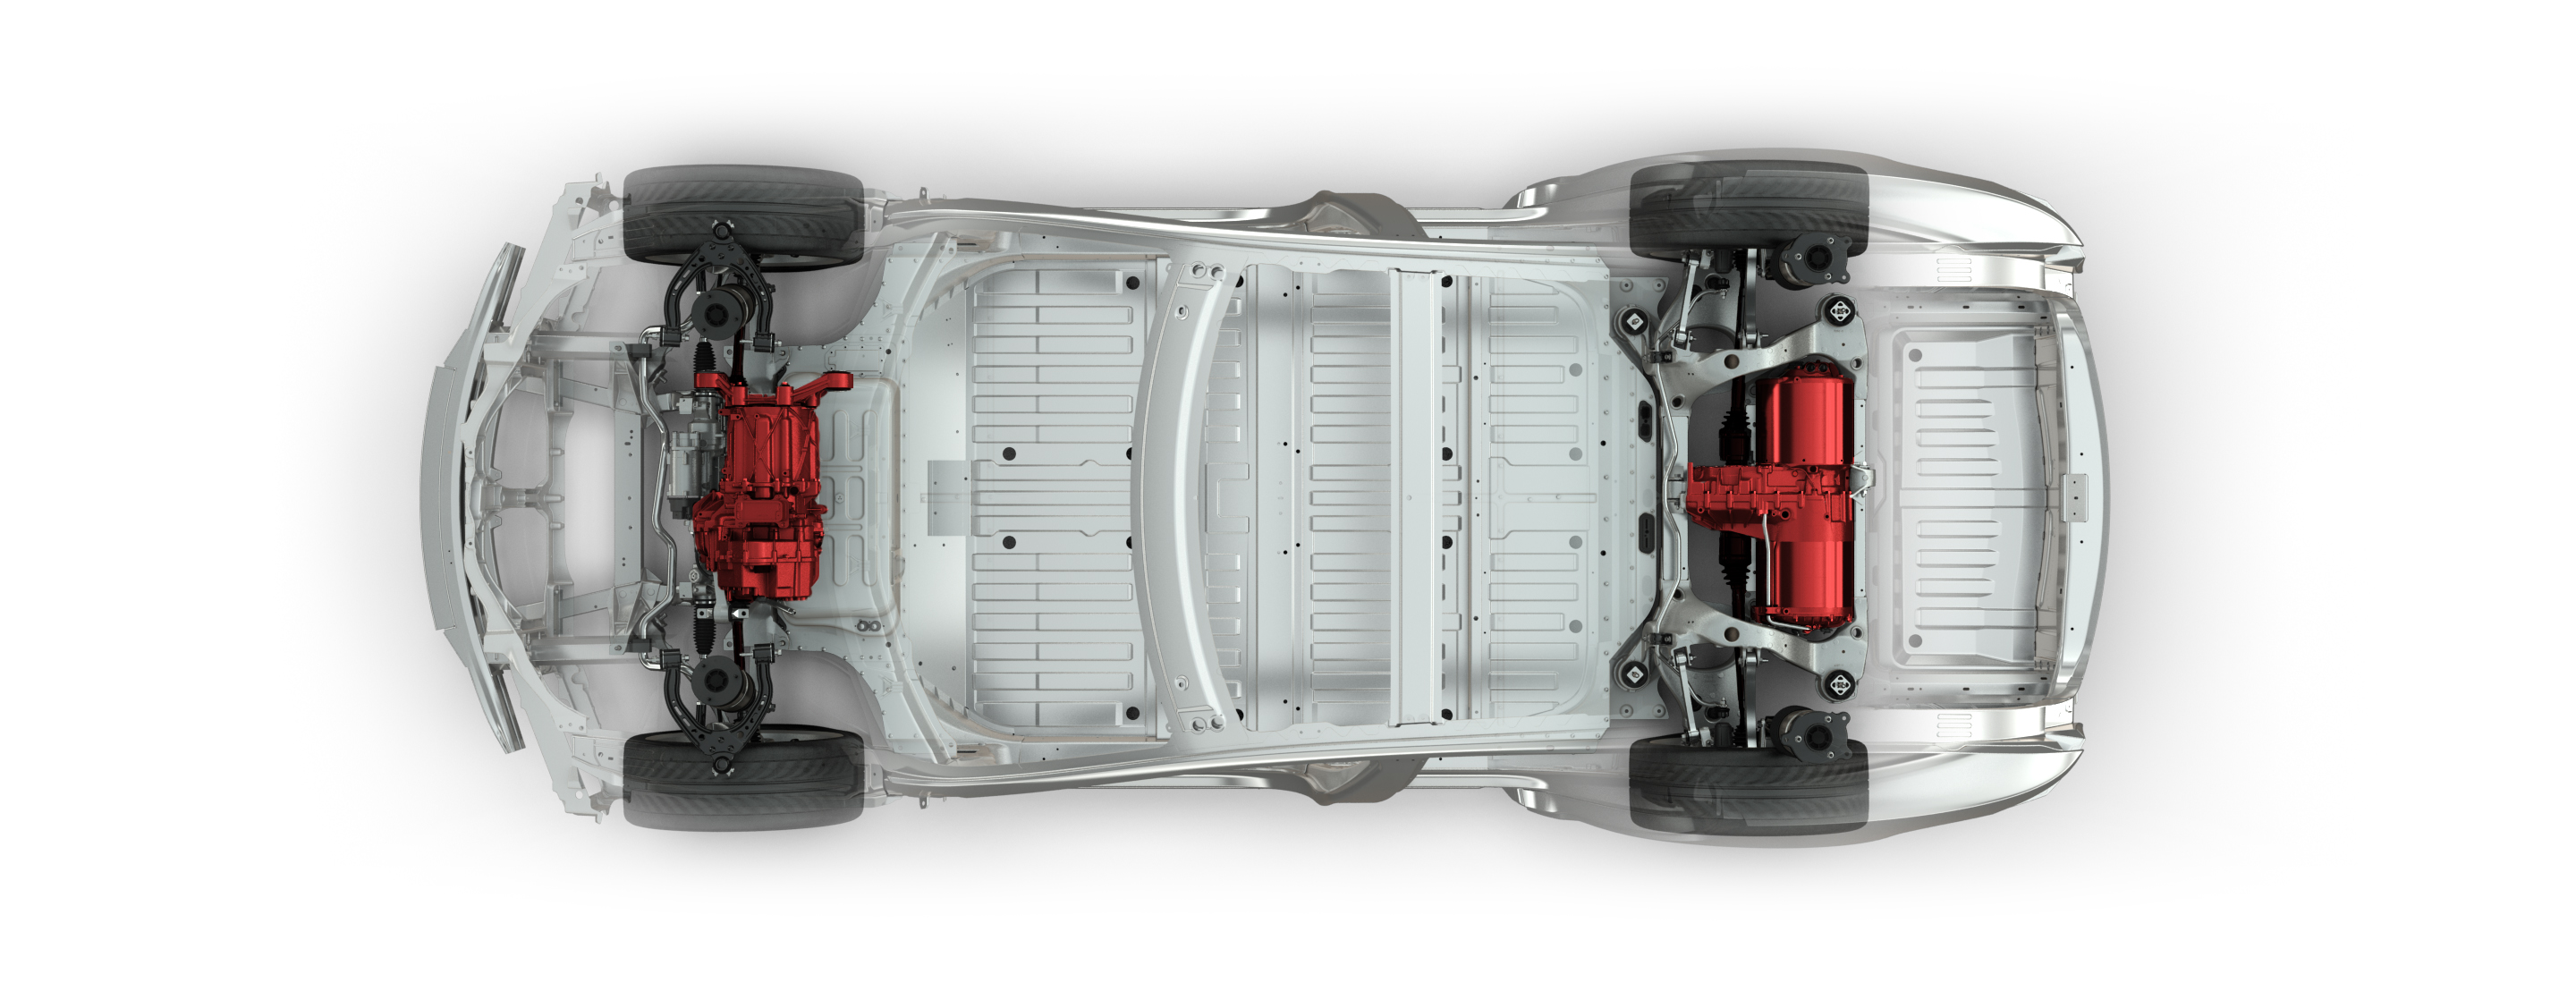 Tesla Motors Gives Us The D Dual Motor All Wheel Drive Model S Variants Ars Technica